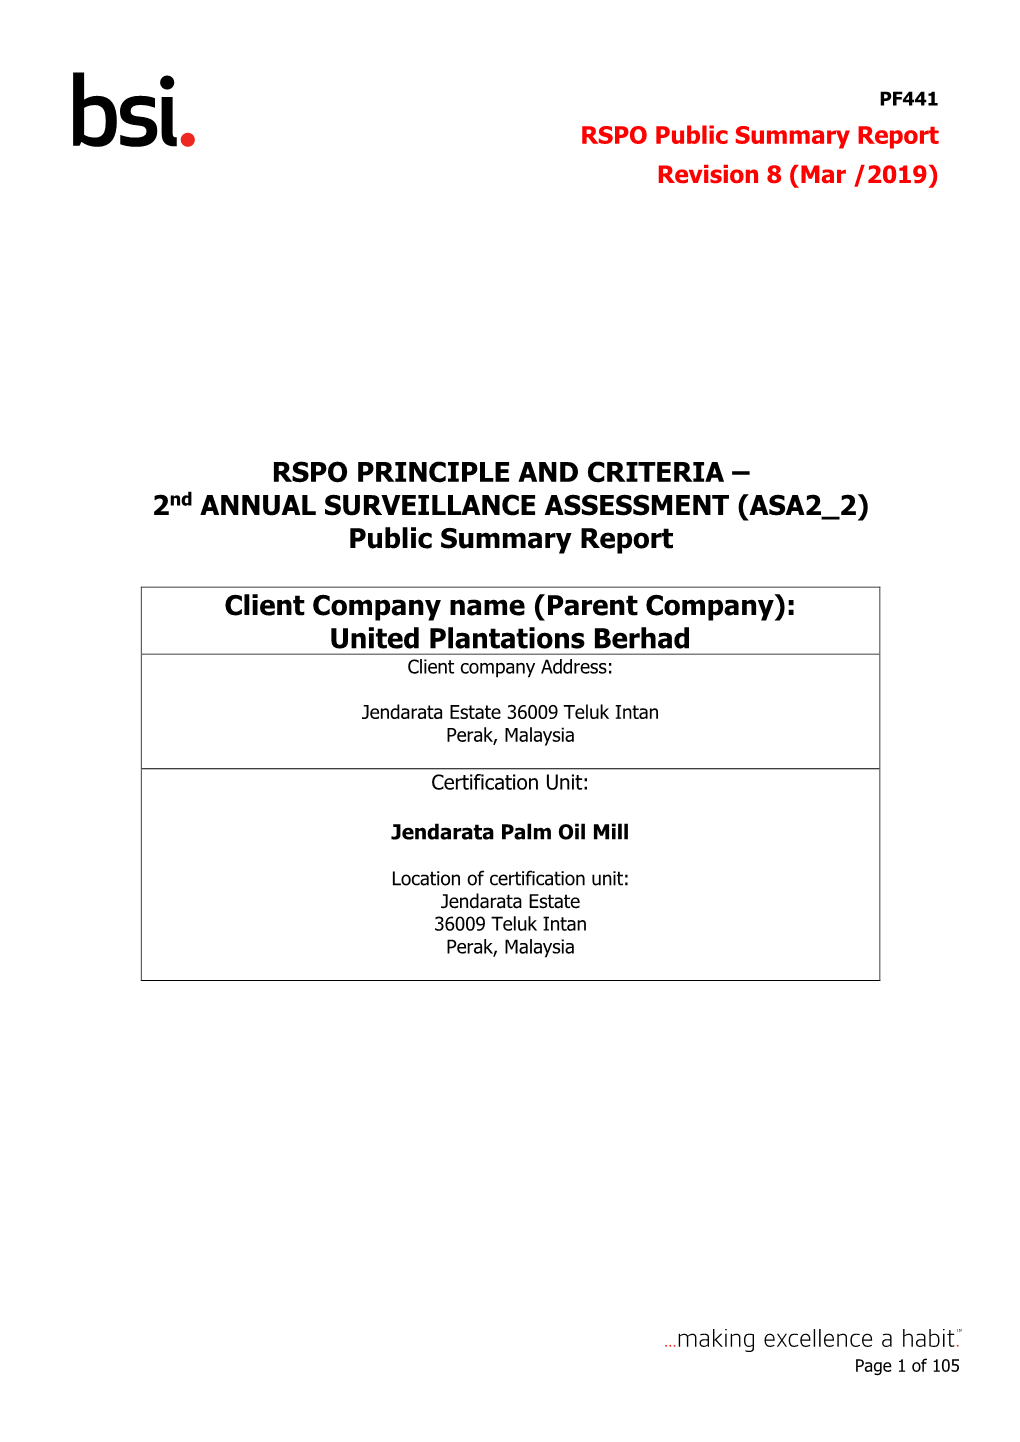 RSPO Public Summary Report Revision 8 (Mar /2019)